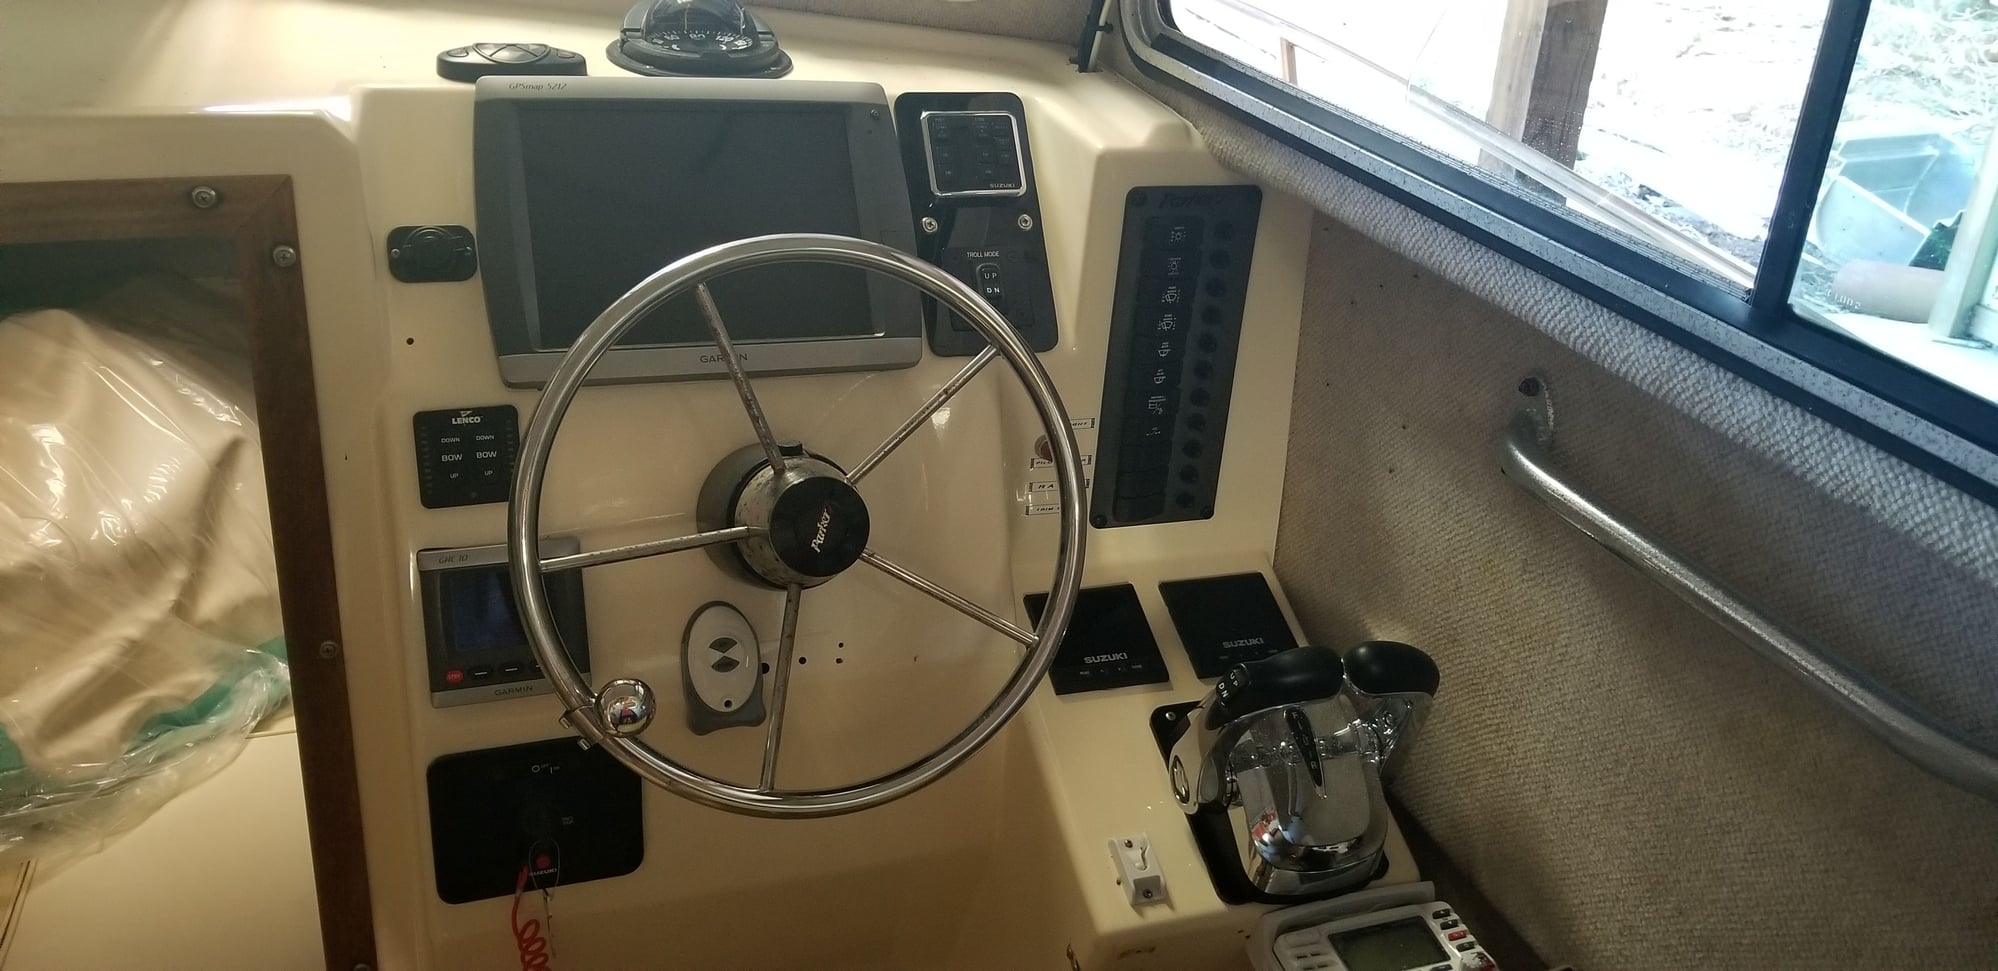 Garmin upgrade transducer or plotter - The Hull Truth - Boating